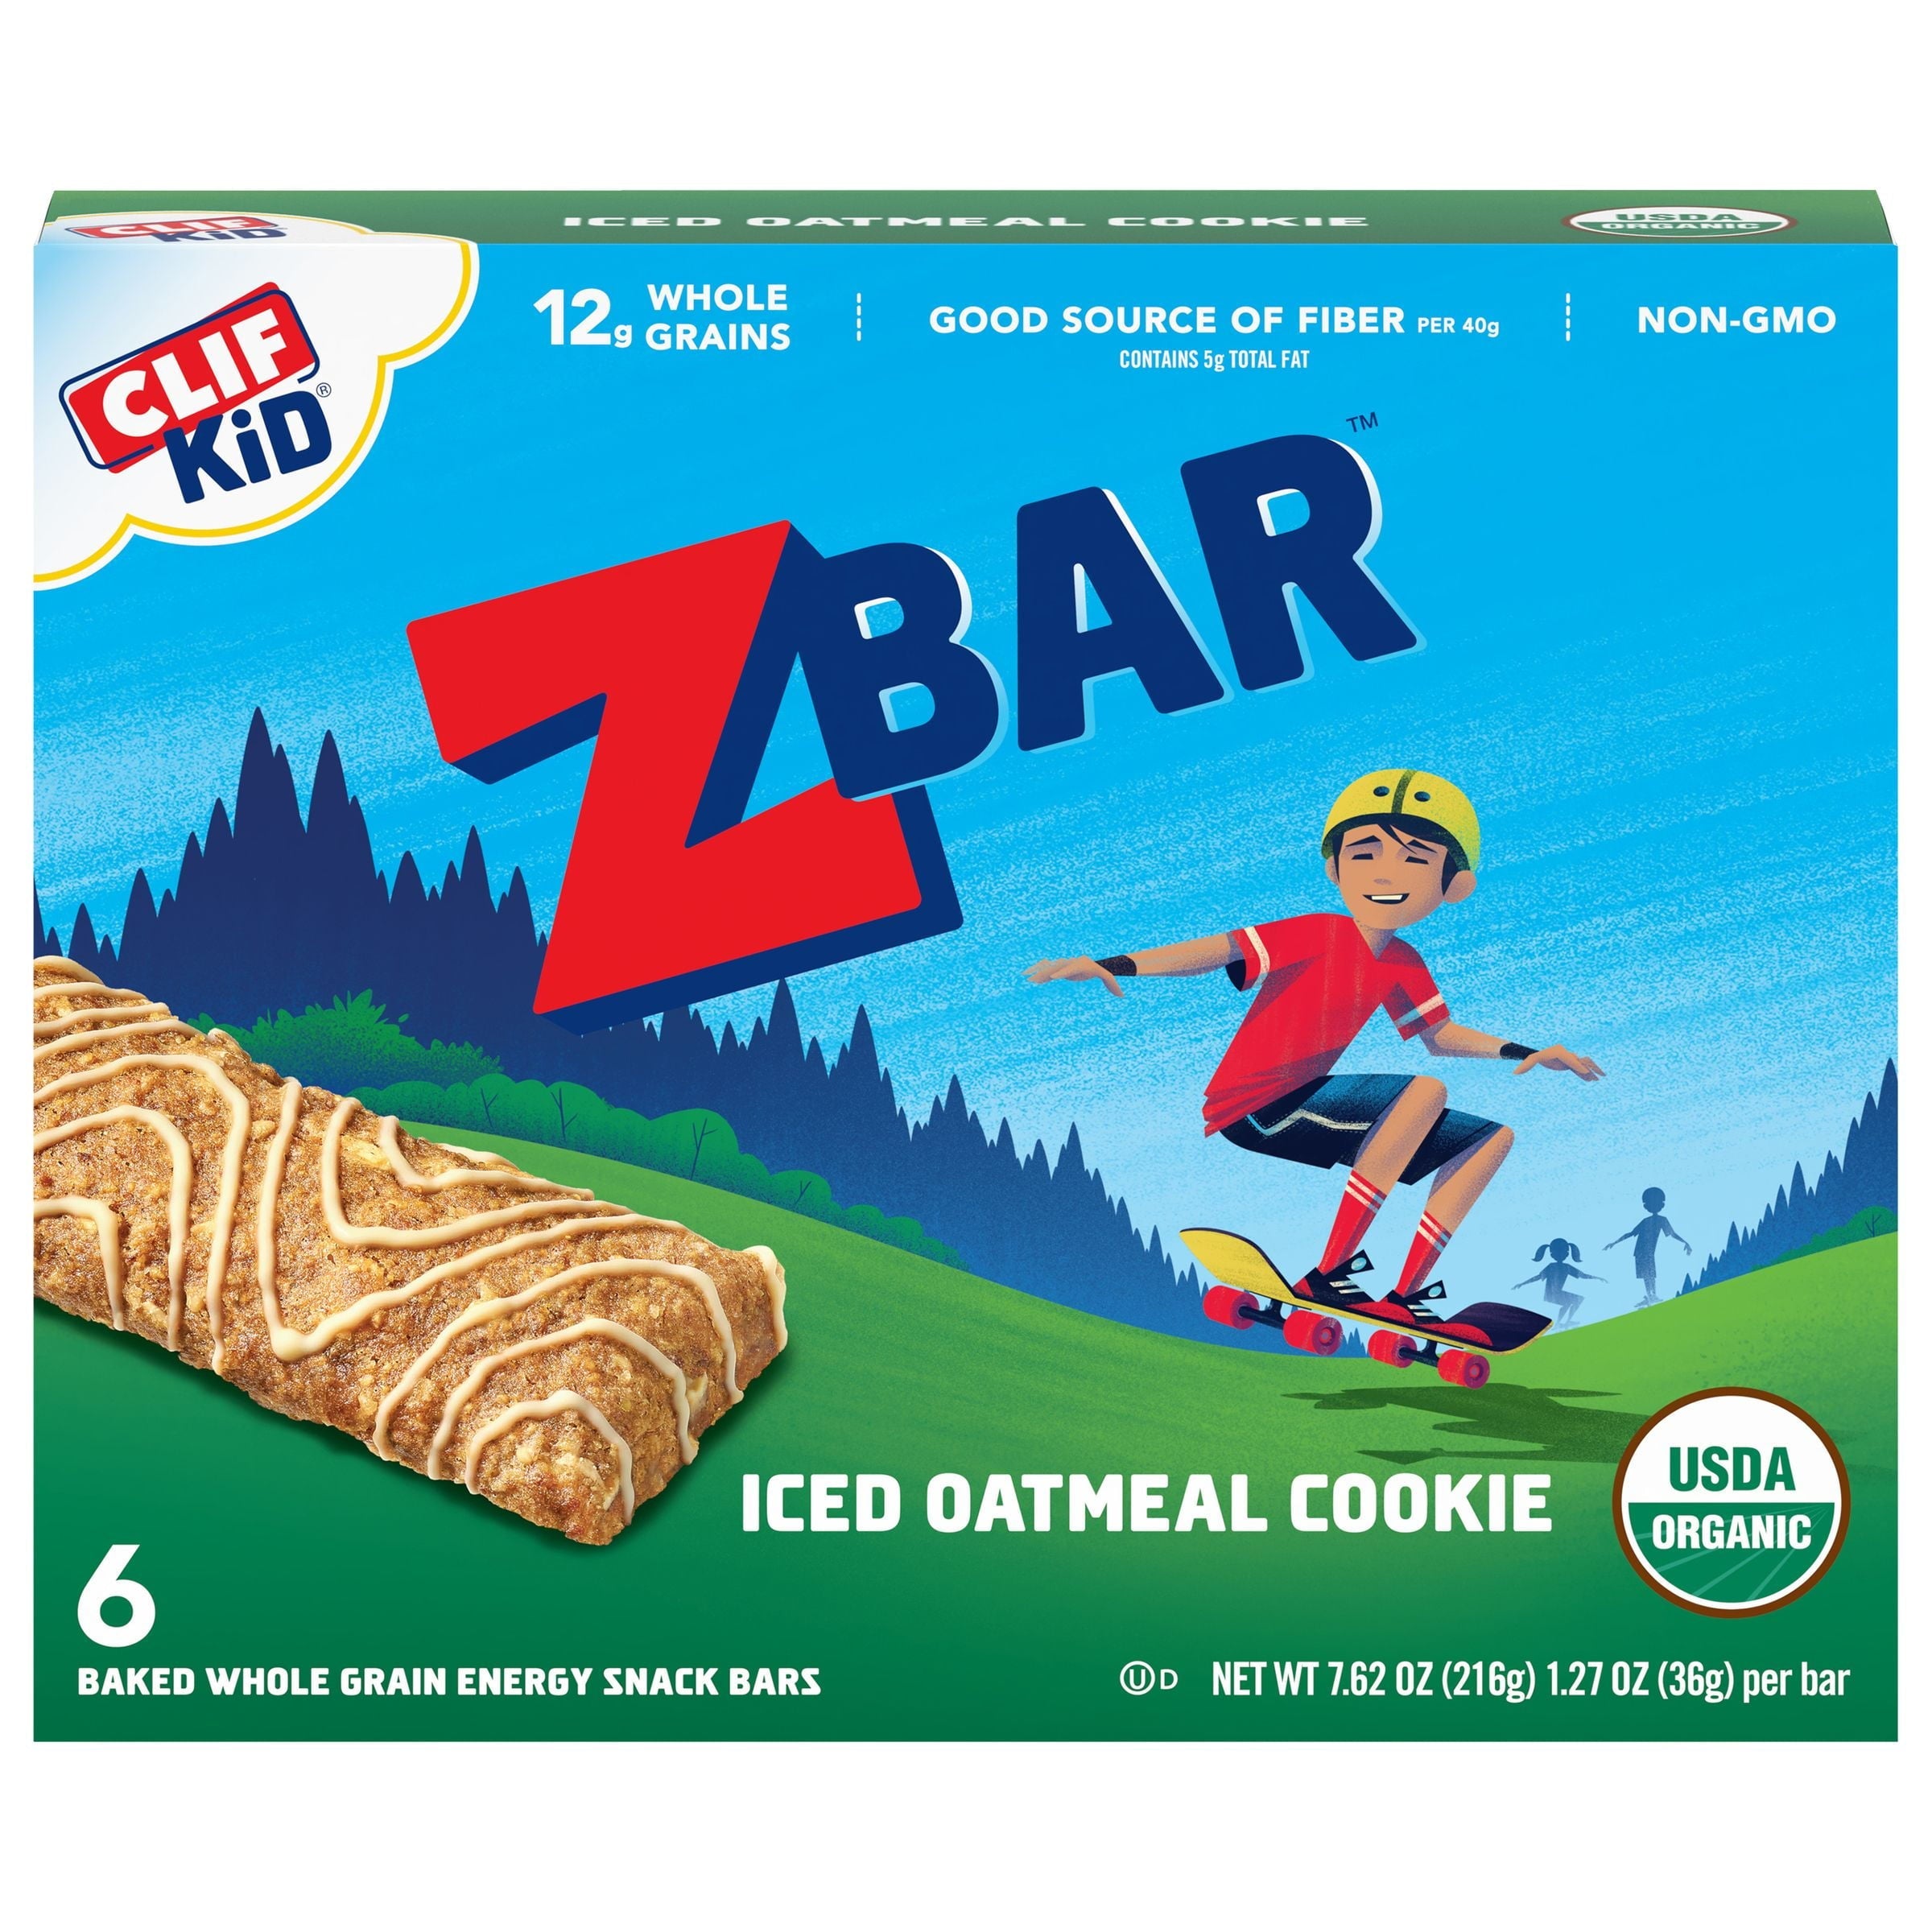 Clif Kid Zbar Iced Oatmeal Cookie 7.62 Oz Box